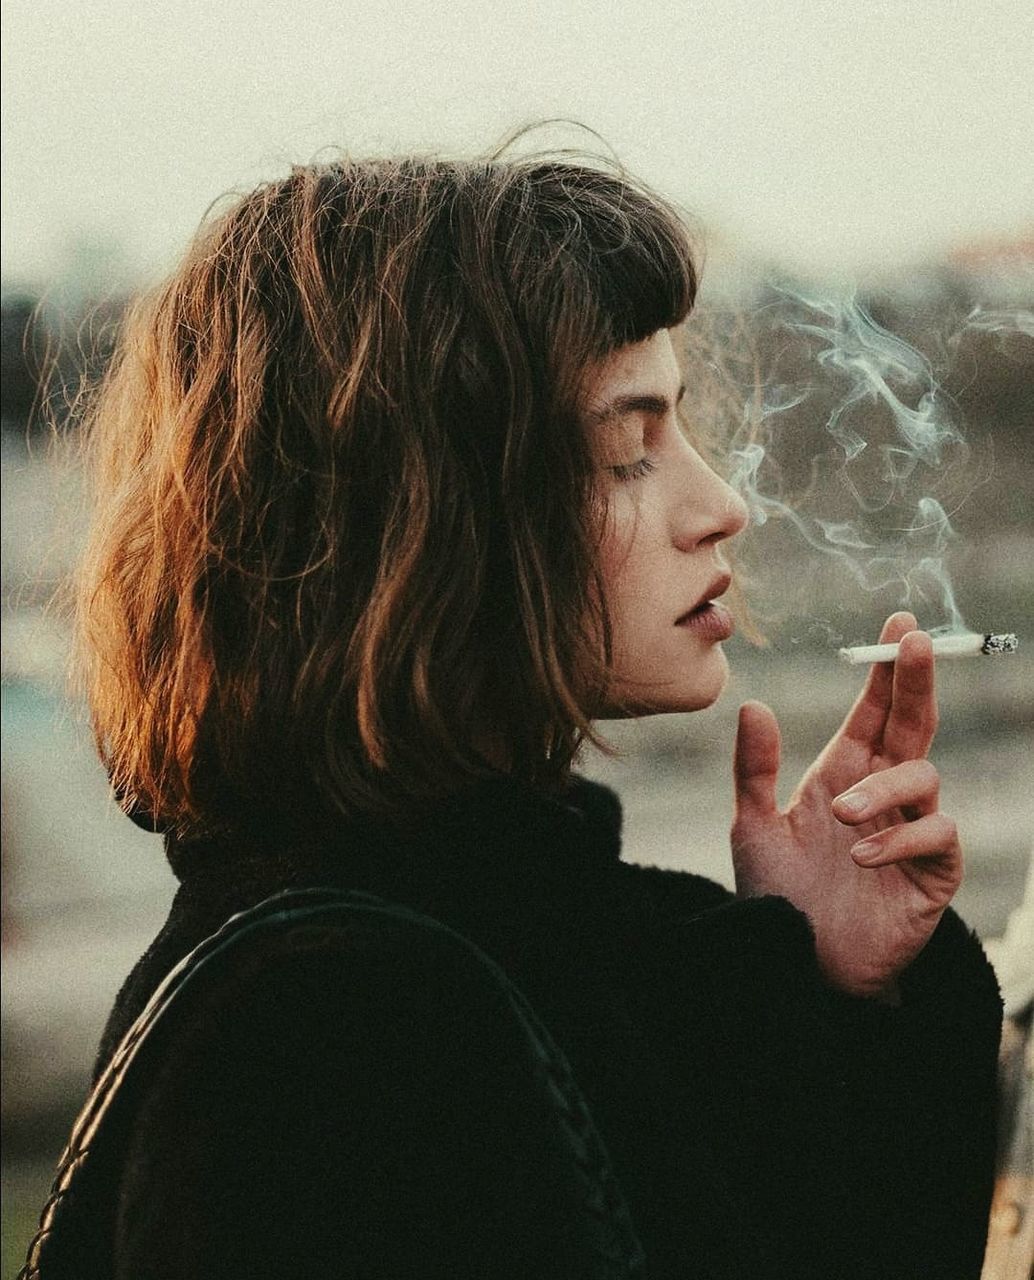 PORTRAIT OF WOMAN SMOKING CIGARETTE OUTDOORS